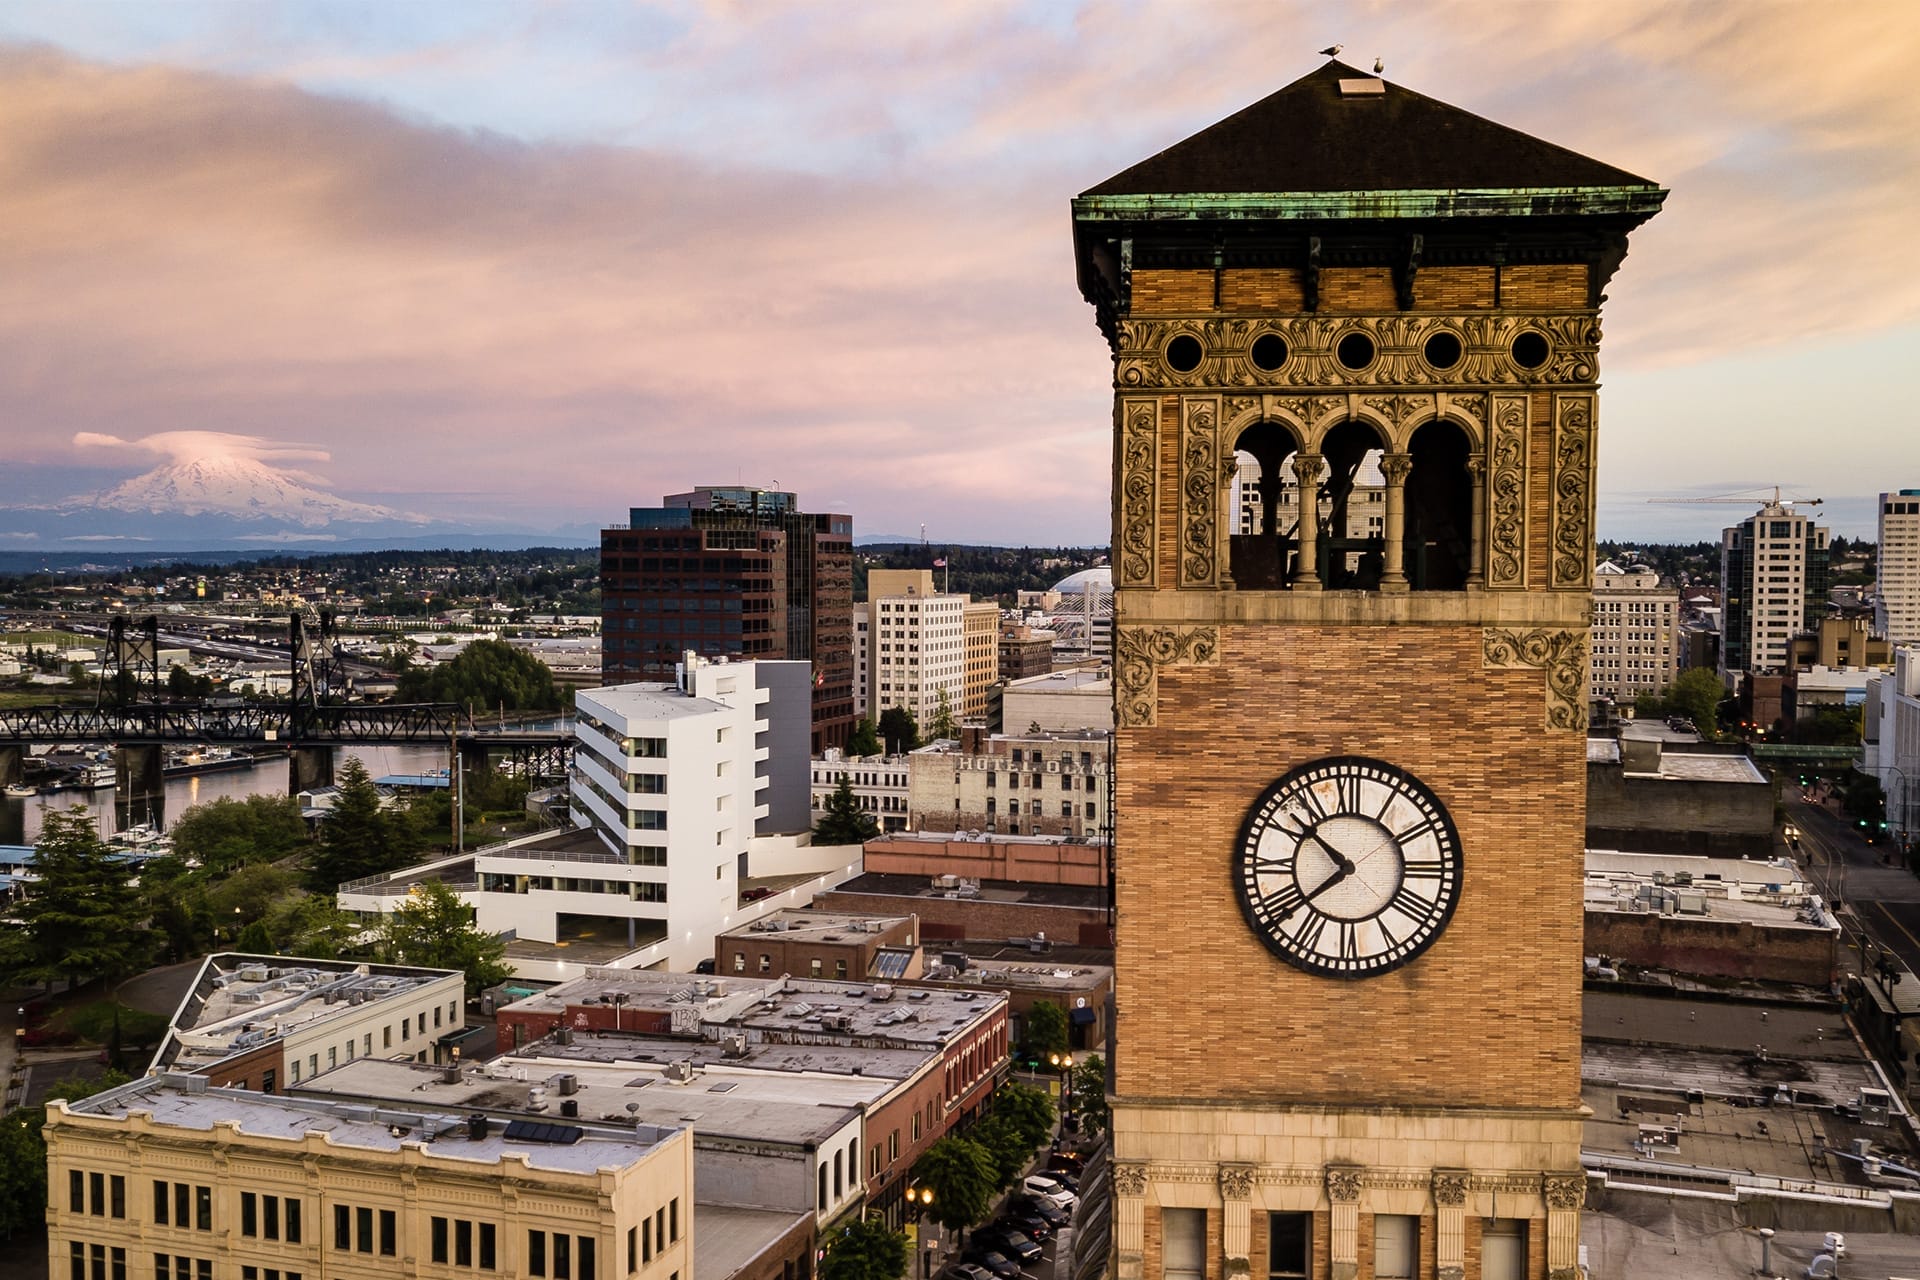 Old City Hall Clocktower in Tacoma, Washington